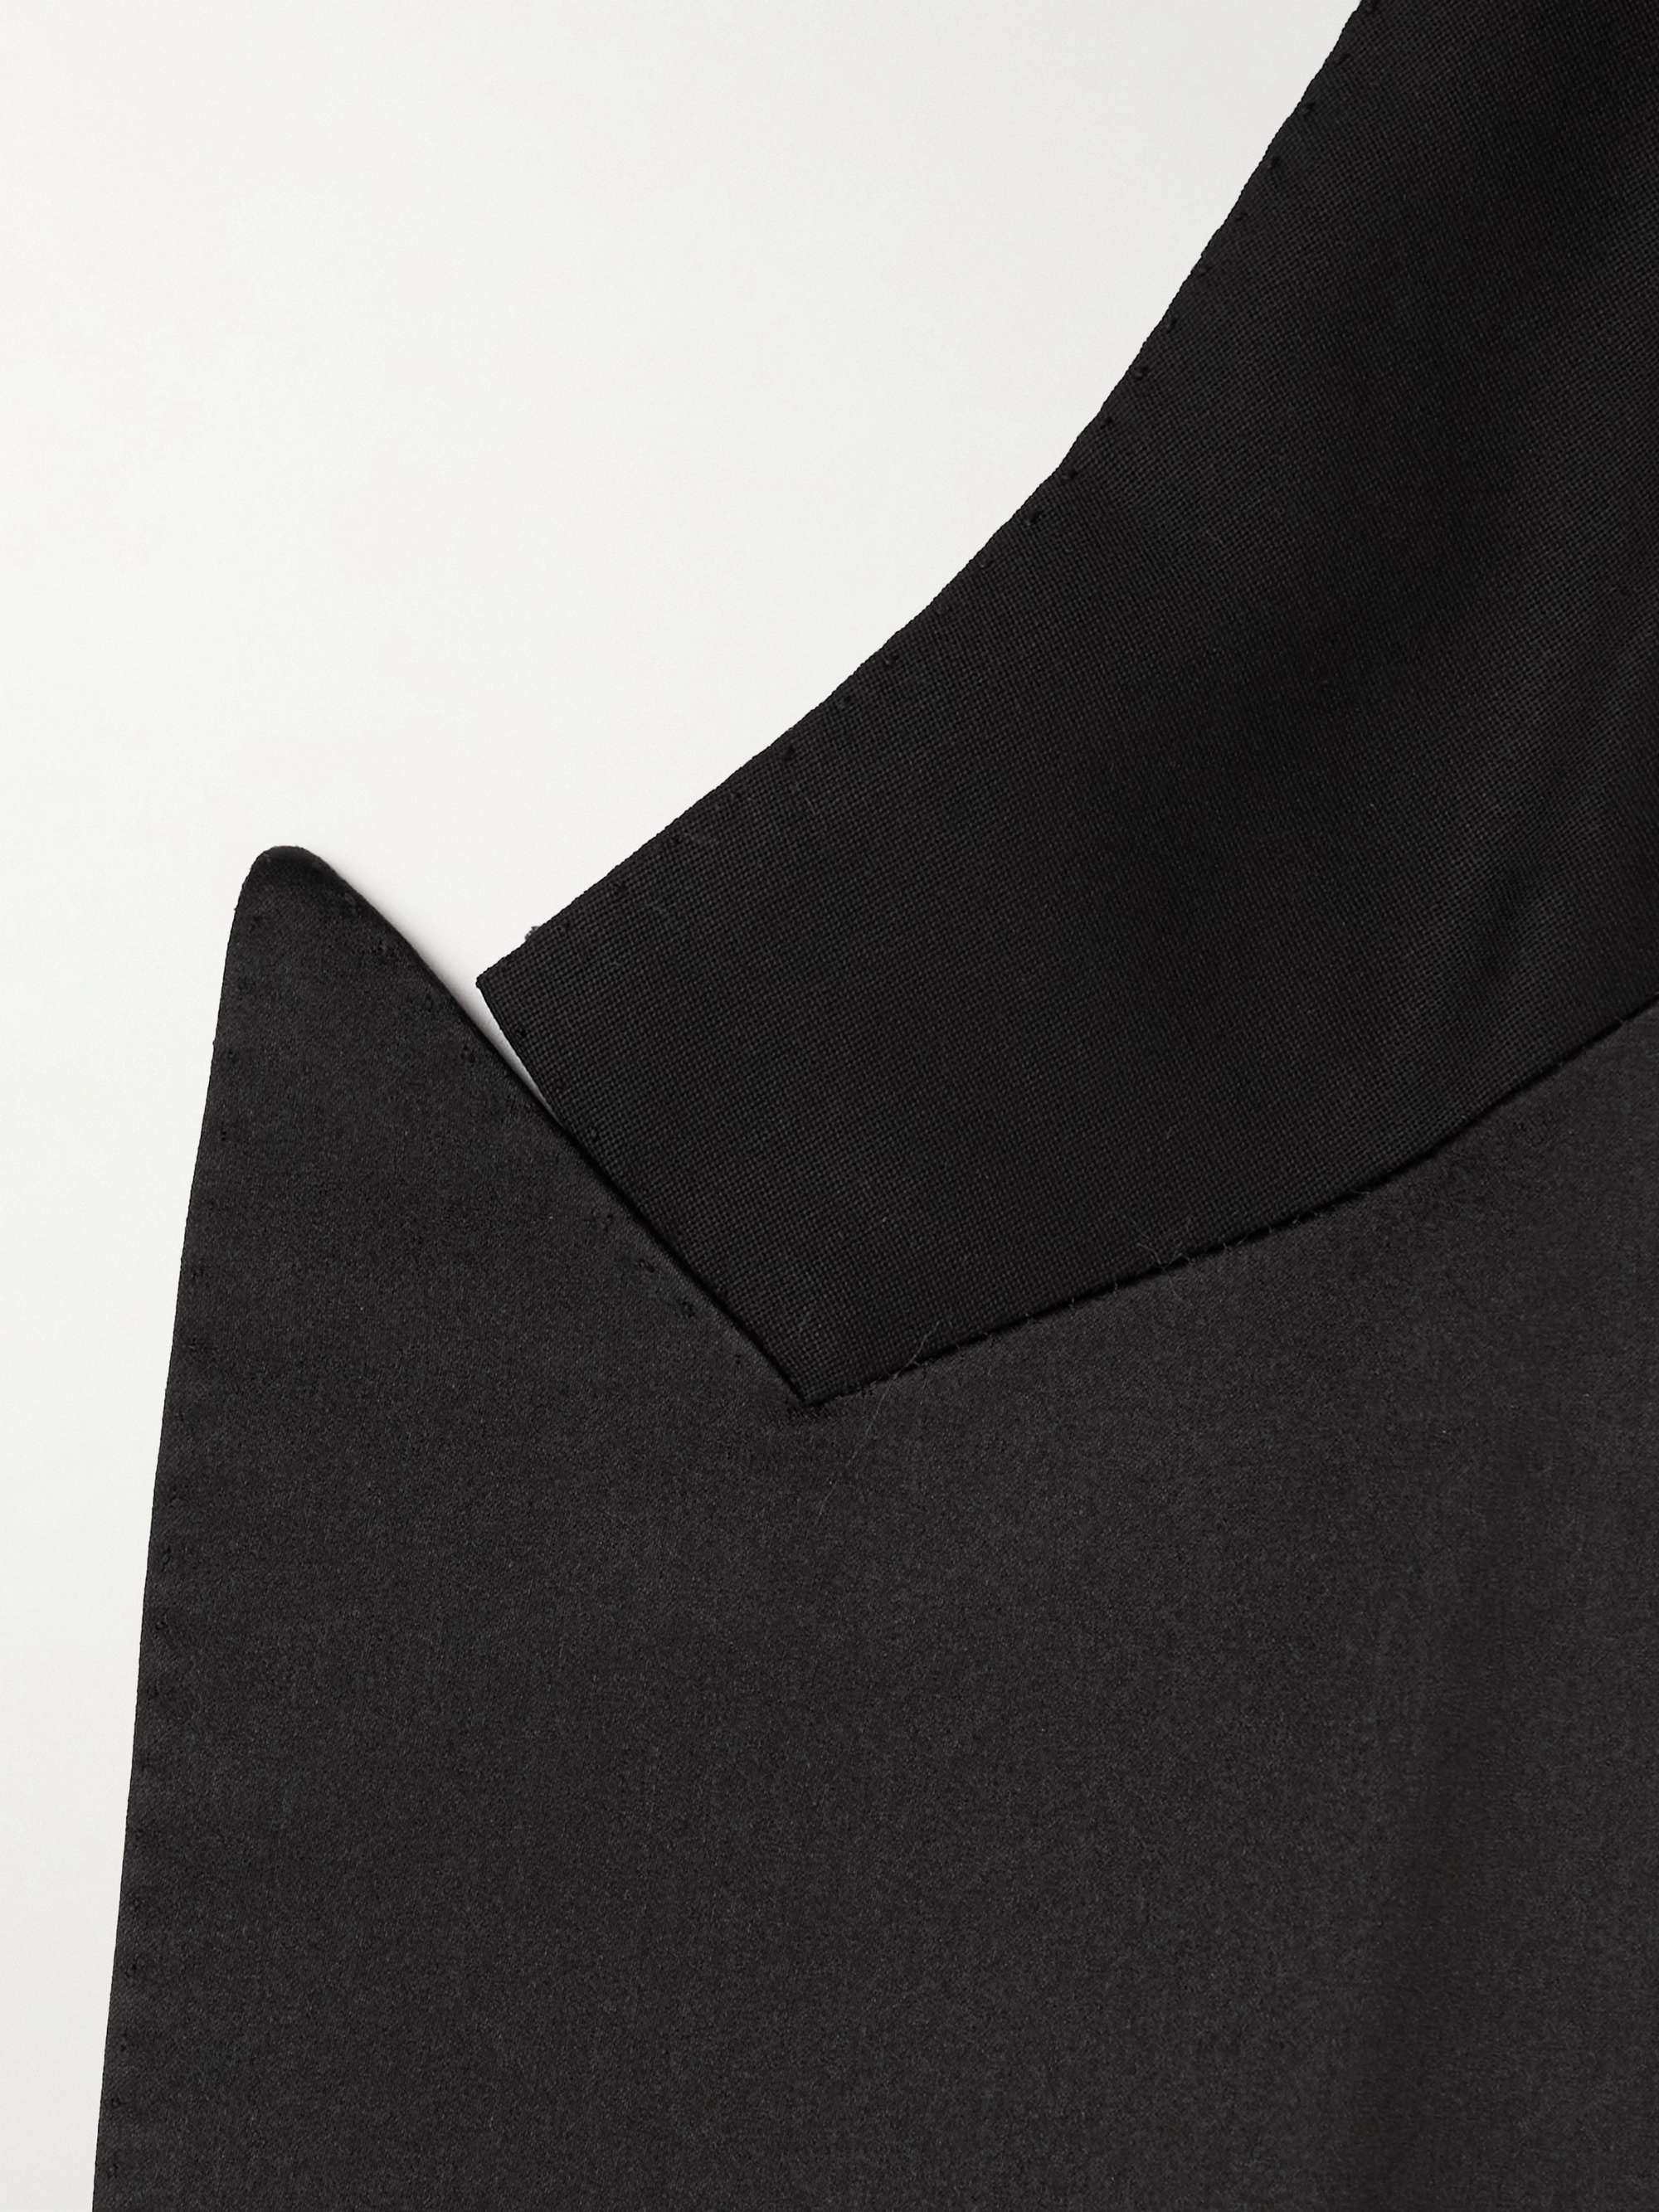 BRIONI Virgilio Silk-Trimmed Wool Tuxedo Jacket